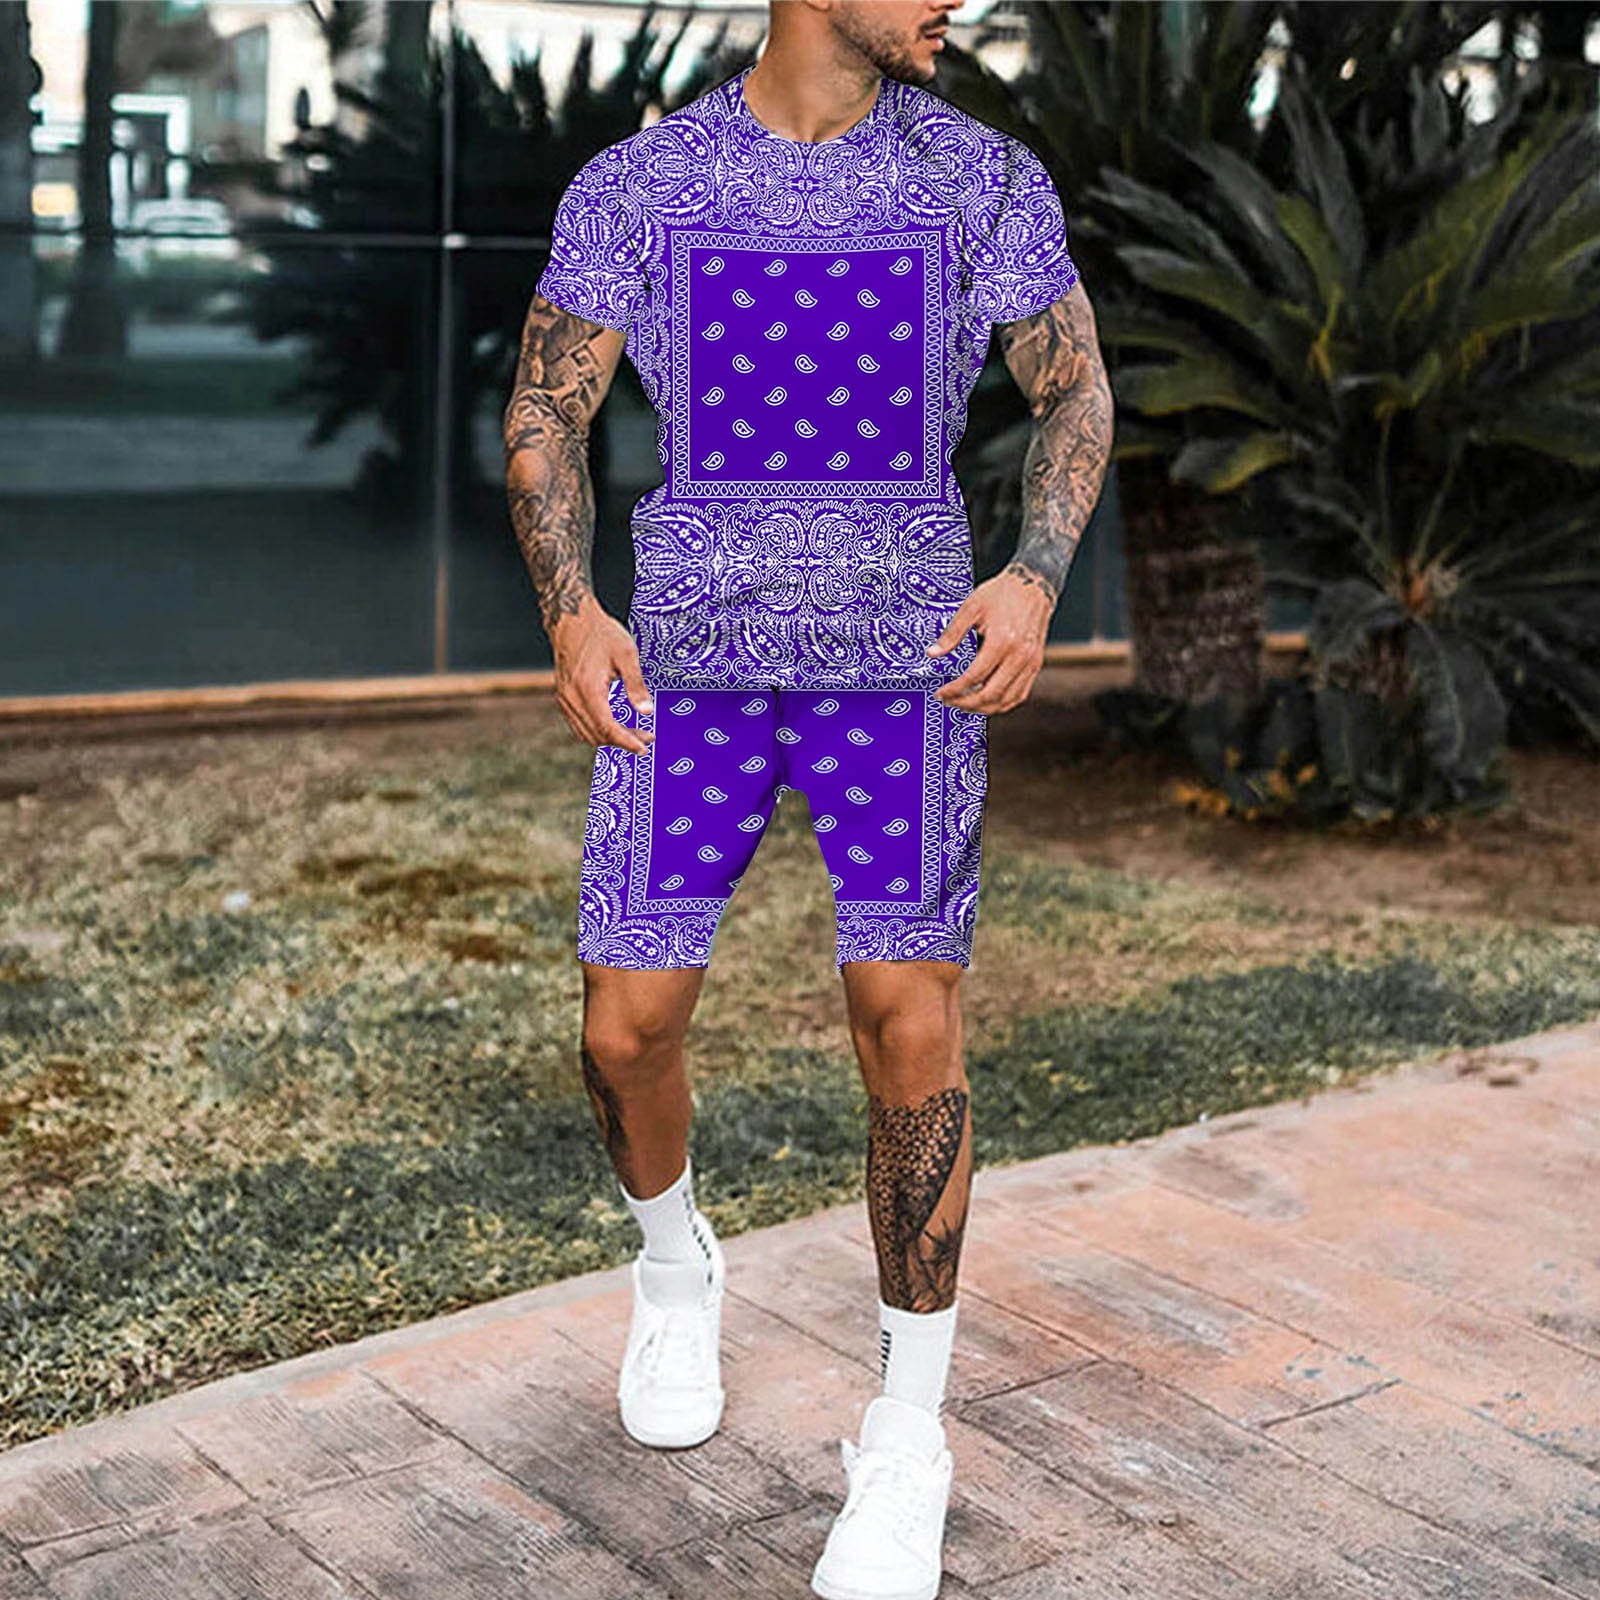 Mens Purple Shorts.